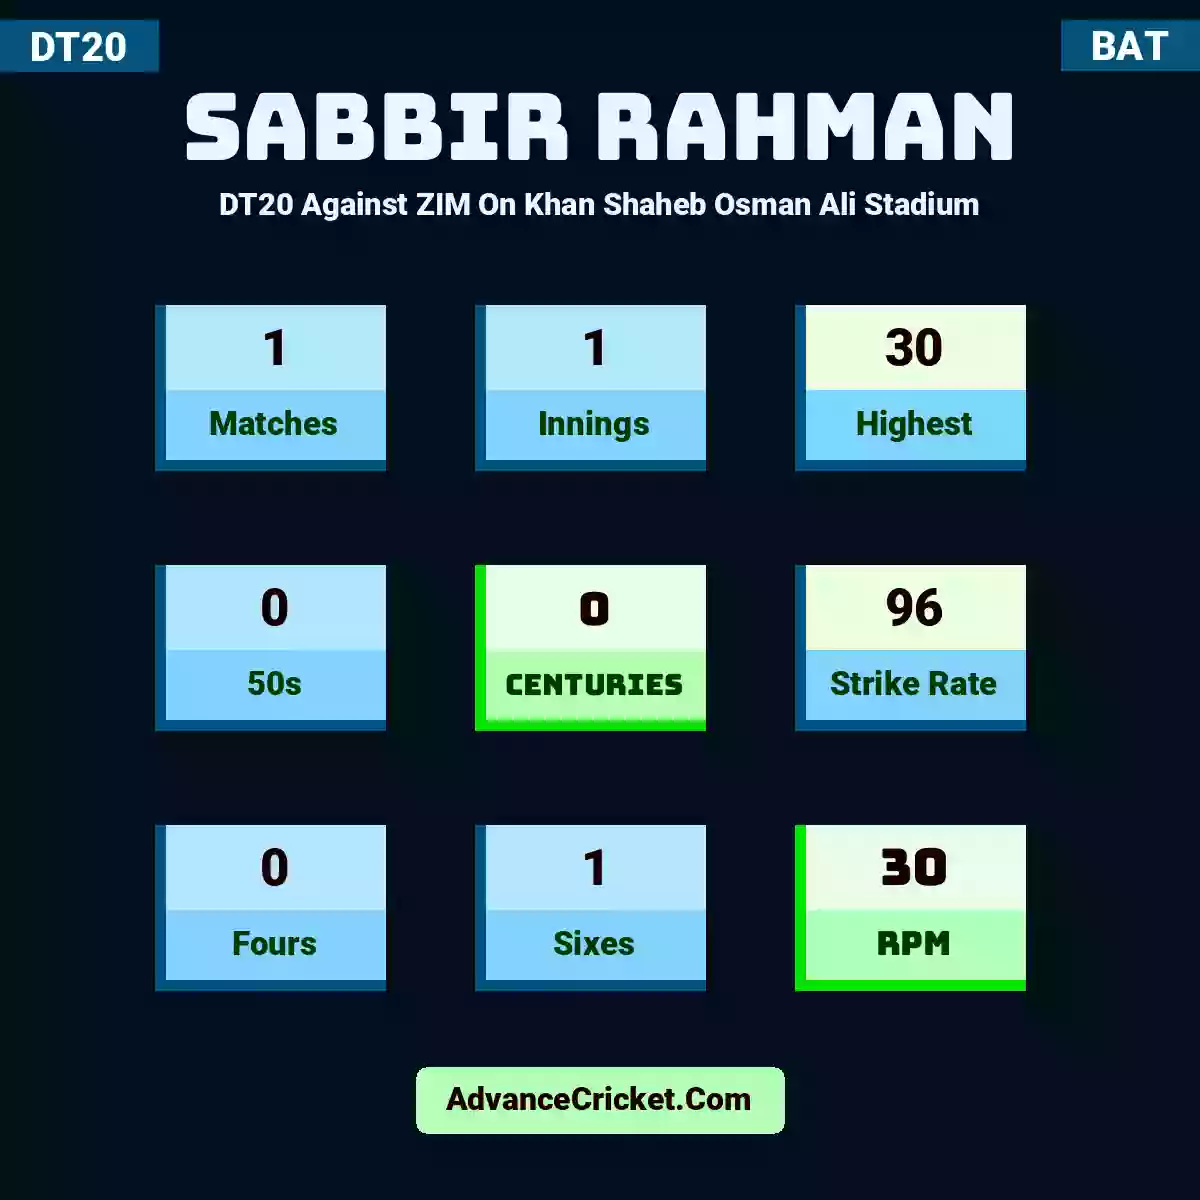 Sabbir Rahman DT20  Against ZIM On Khan Shaheb Osman Ali Stadium, Sabbir Rahman played 1 matches, scored 30 runs as highest, 0 half-centuries, and 0 centuries, with a strike rate of 96. S.Rahman hit 0 fours and 1 sixes, with an RPM of 30.